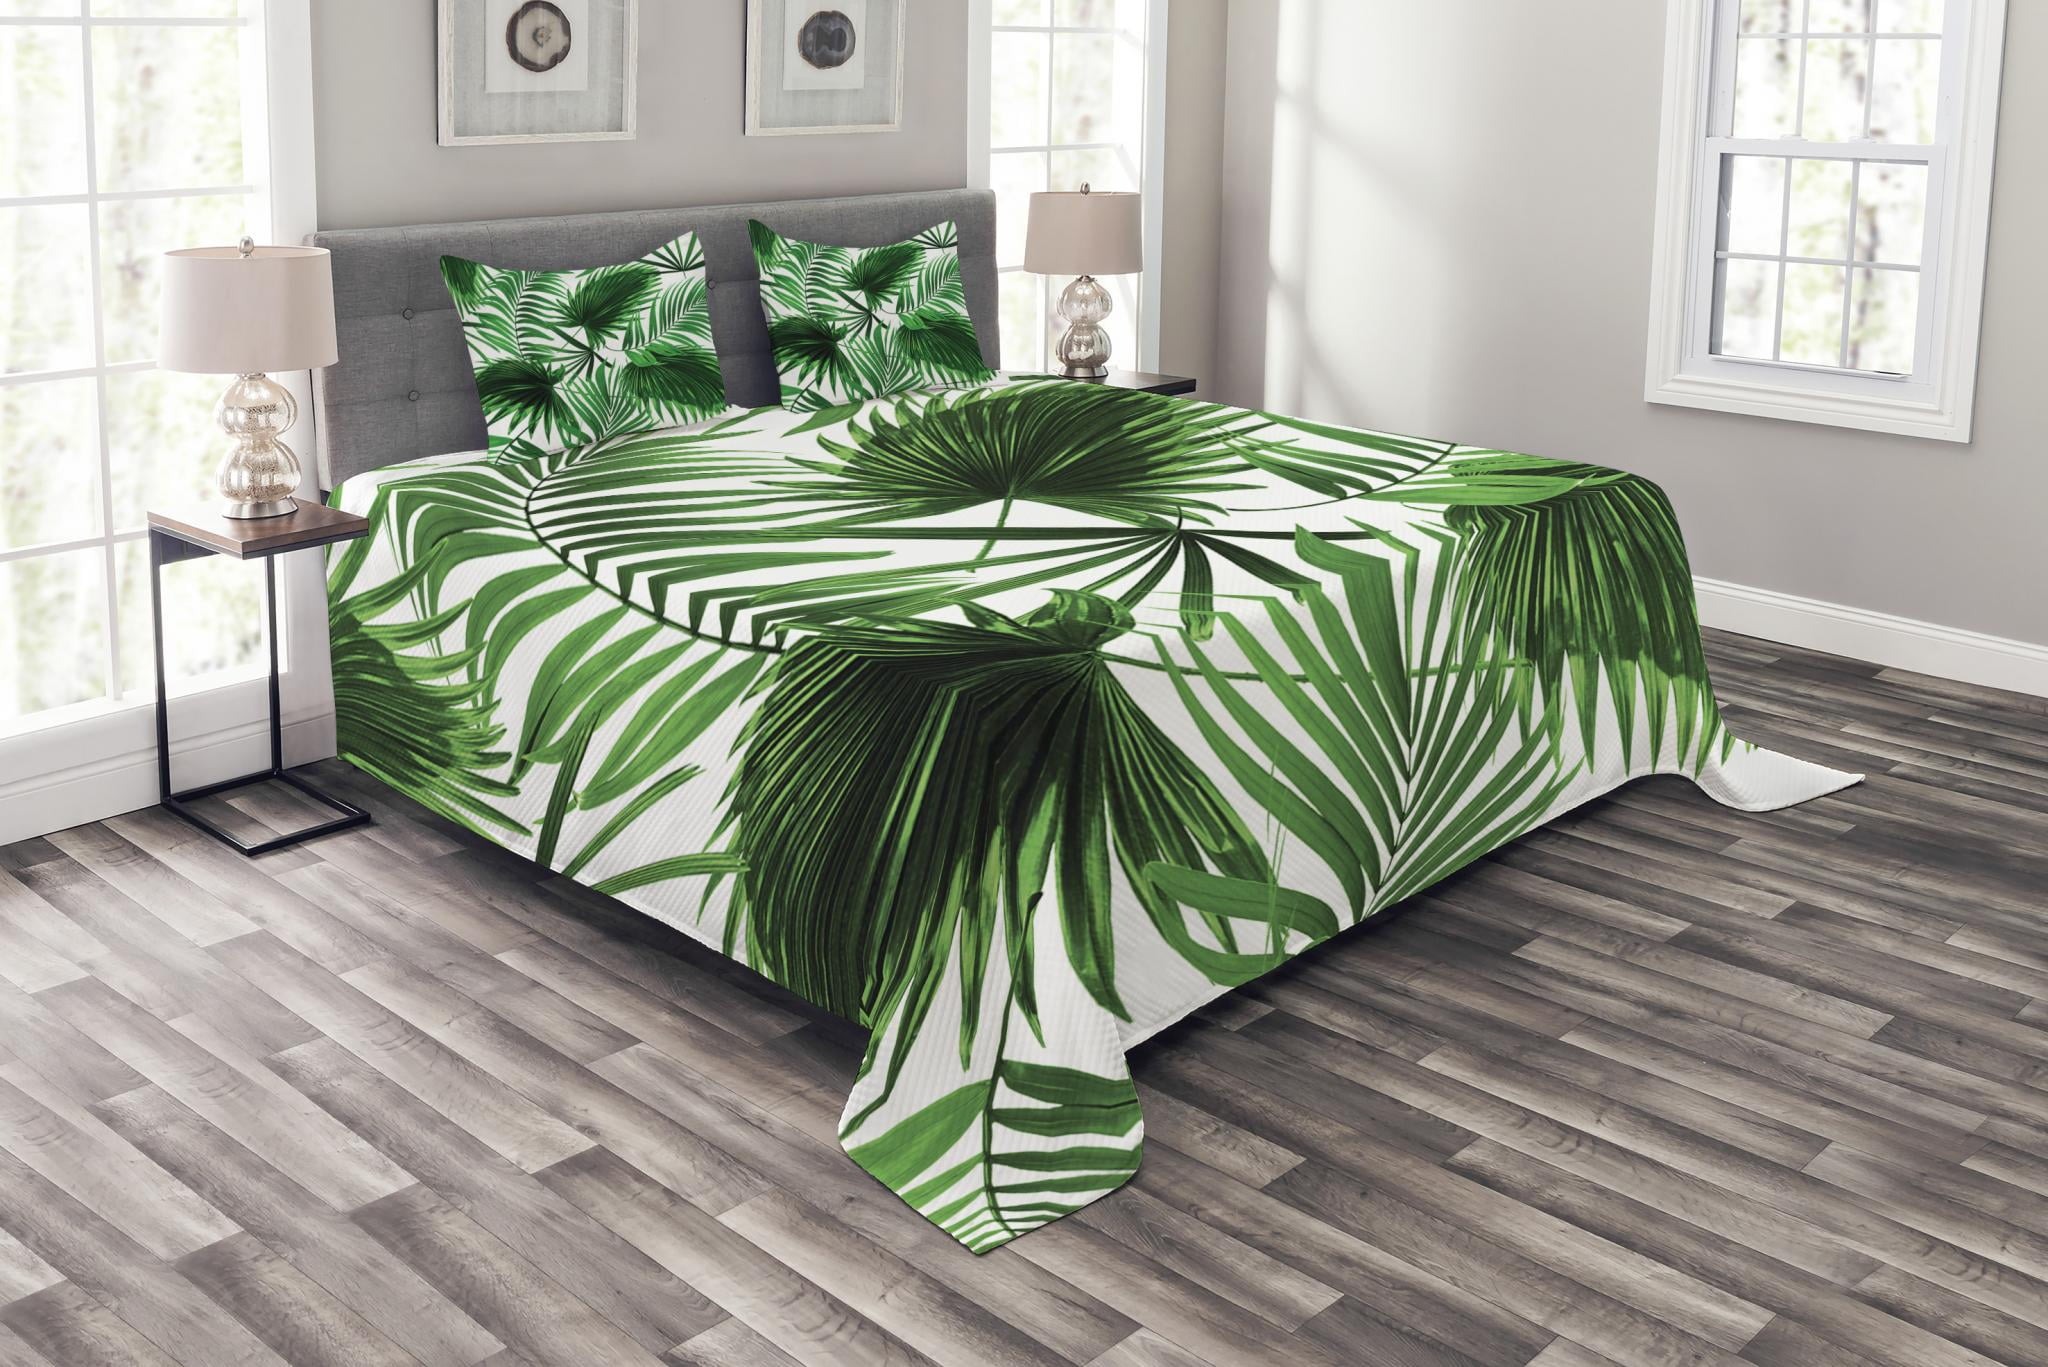 Palm Leaf Bedspread Set King Size, Realistic Vivid Leaves of Palm Tree